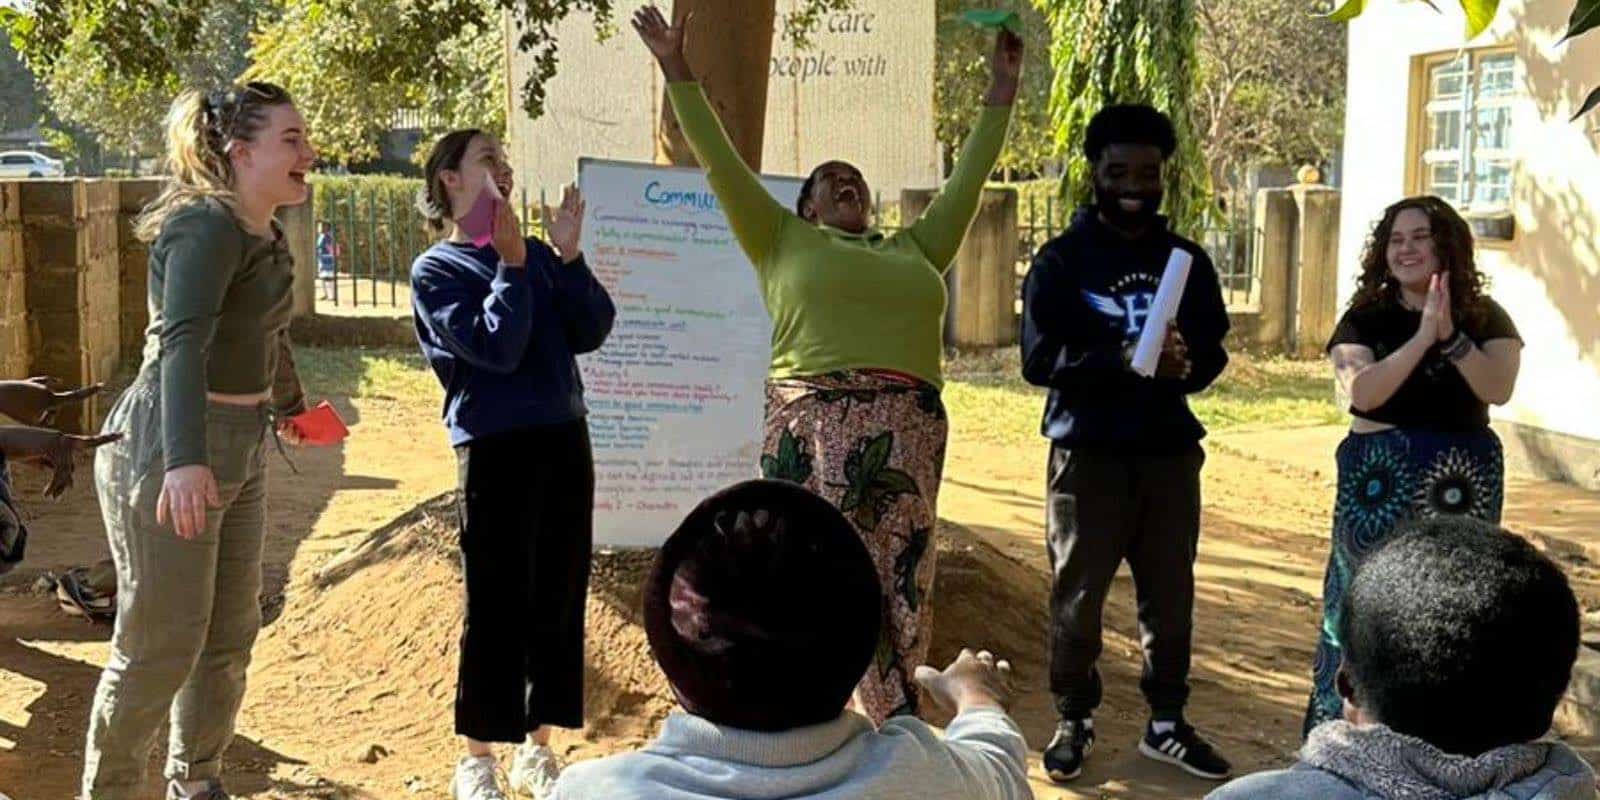 volunteer teaching outdoors and having fun